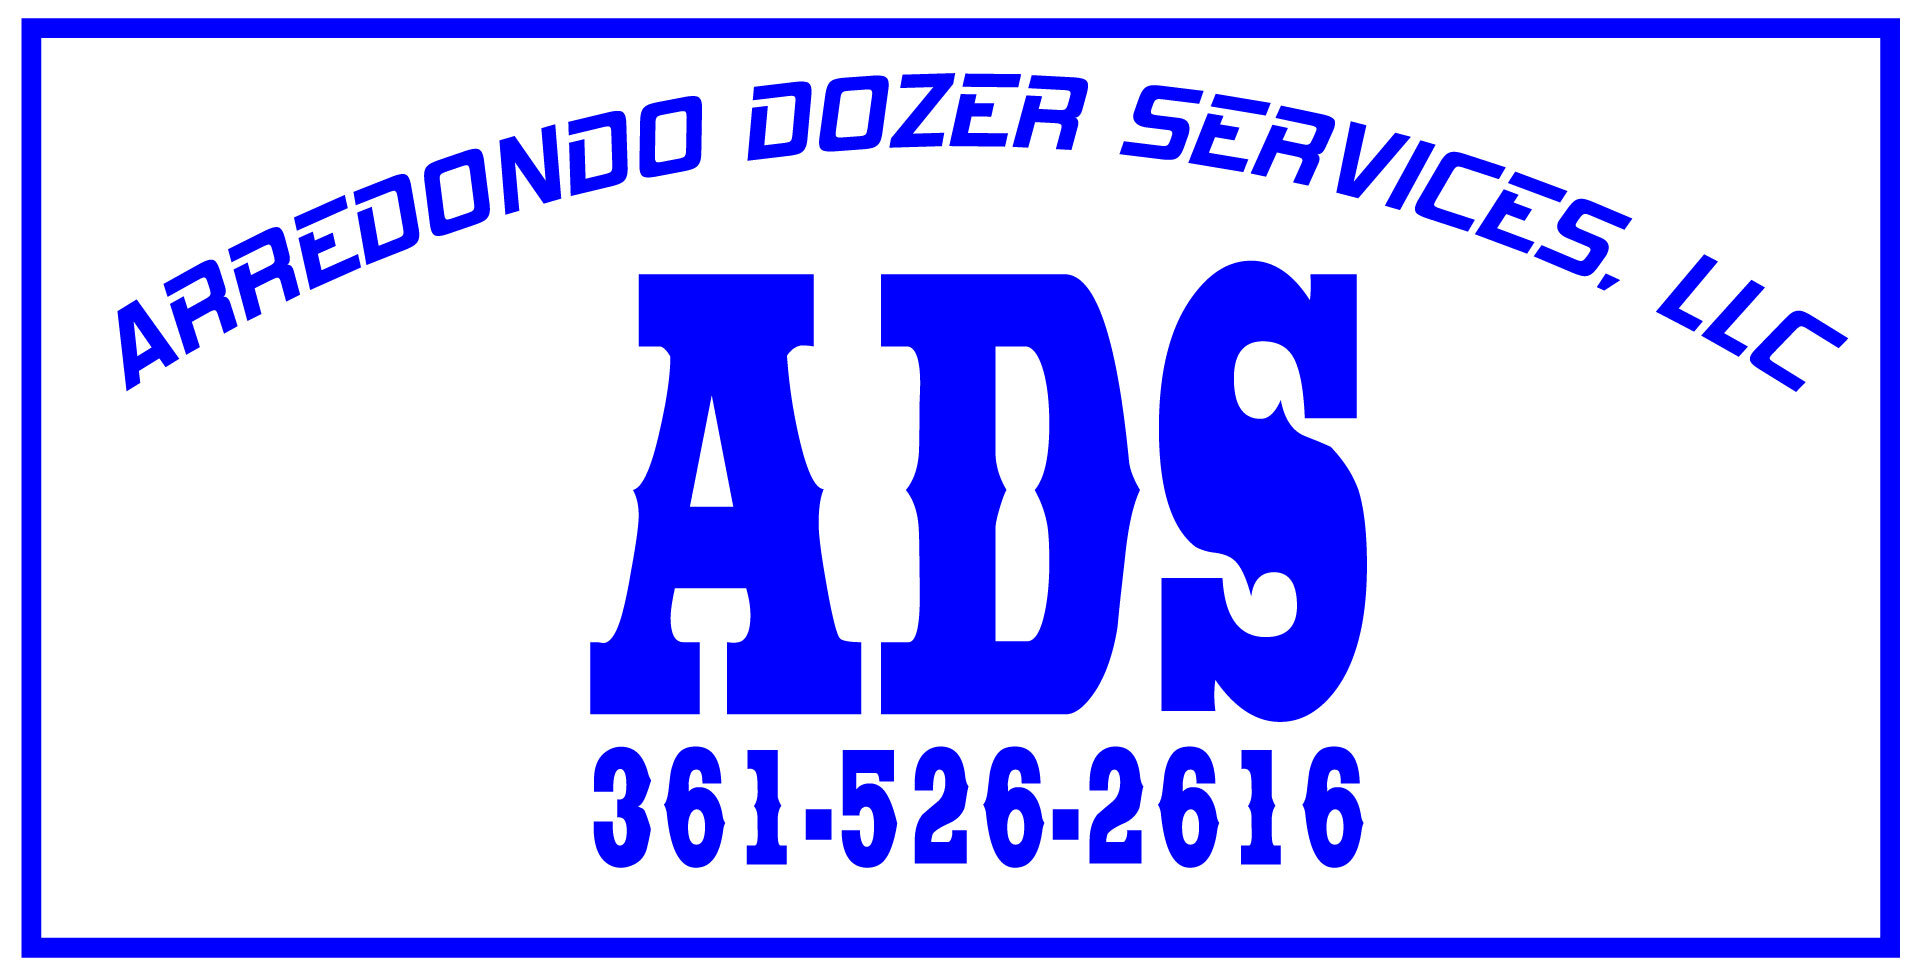 2019-0718-Arredando-Logo.jpg